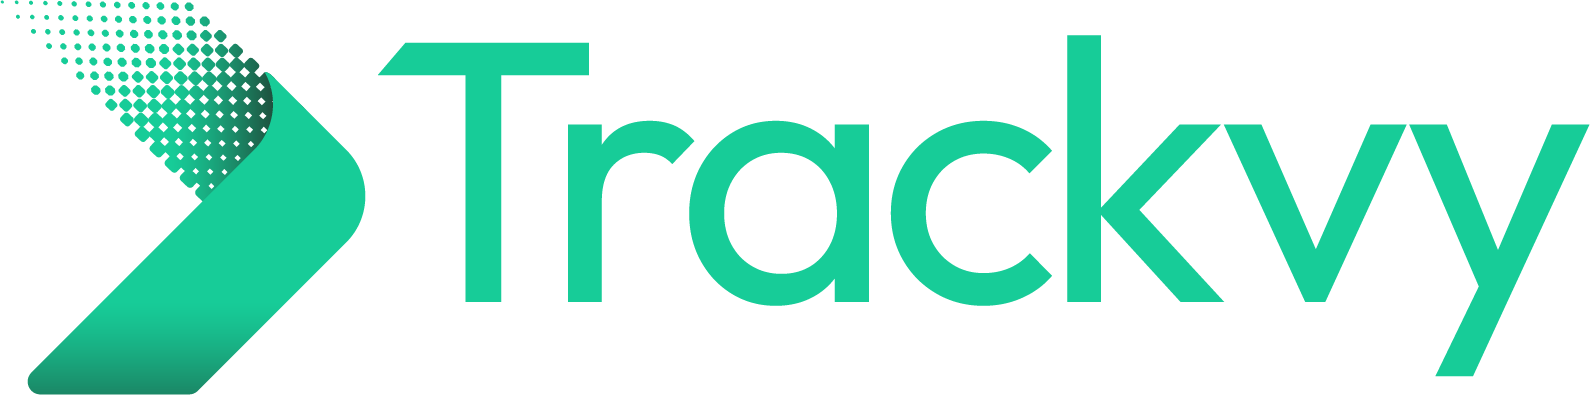 Trackvy Logo